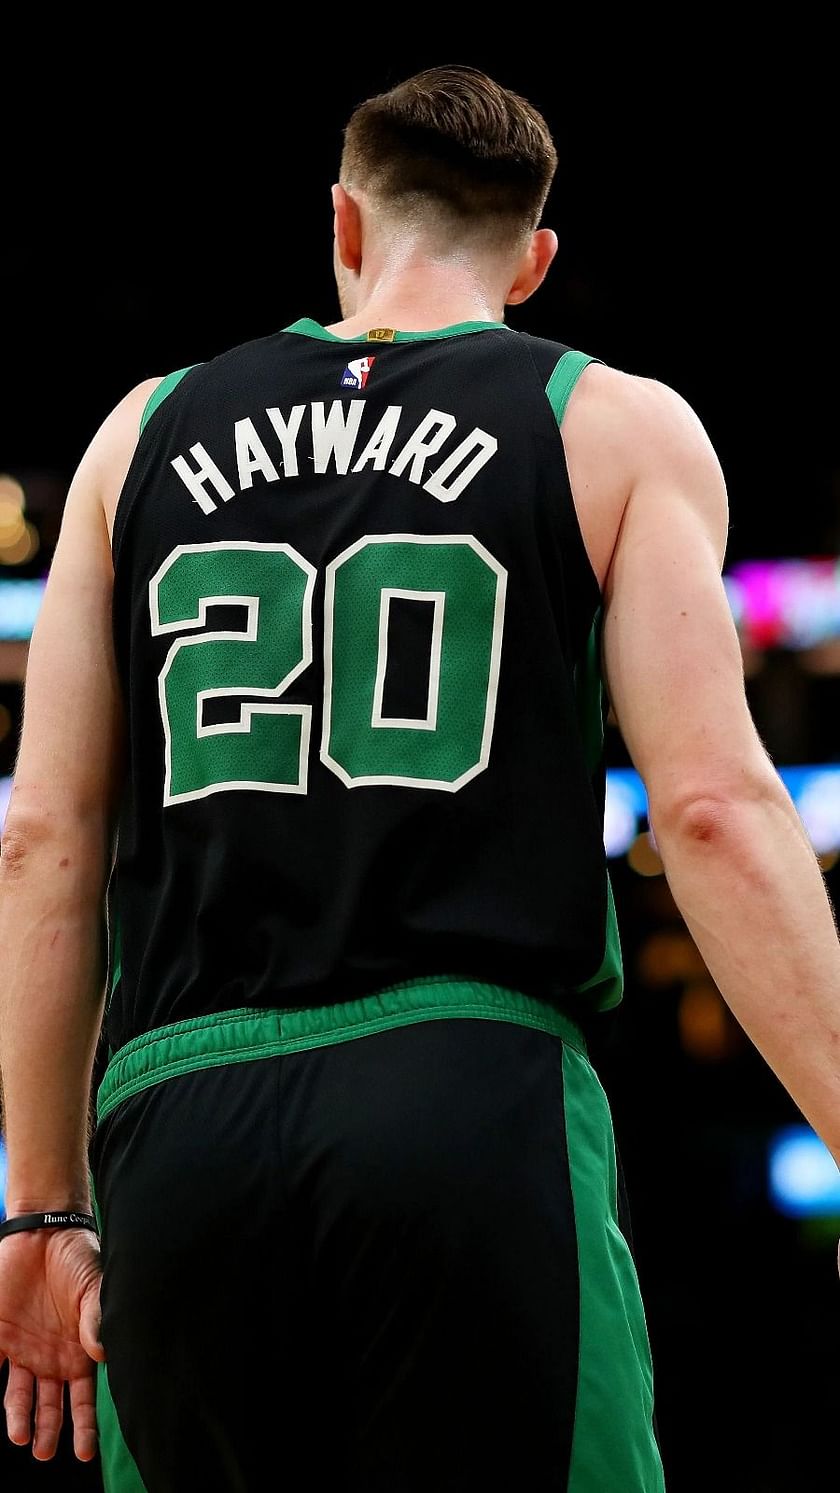 Gordon Hayward's Injury: Celtics' Star and Team Learn to Cope